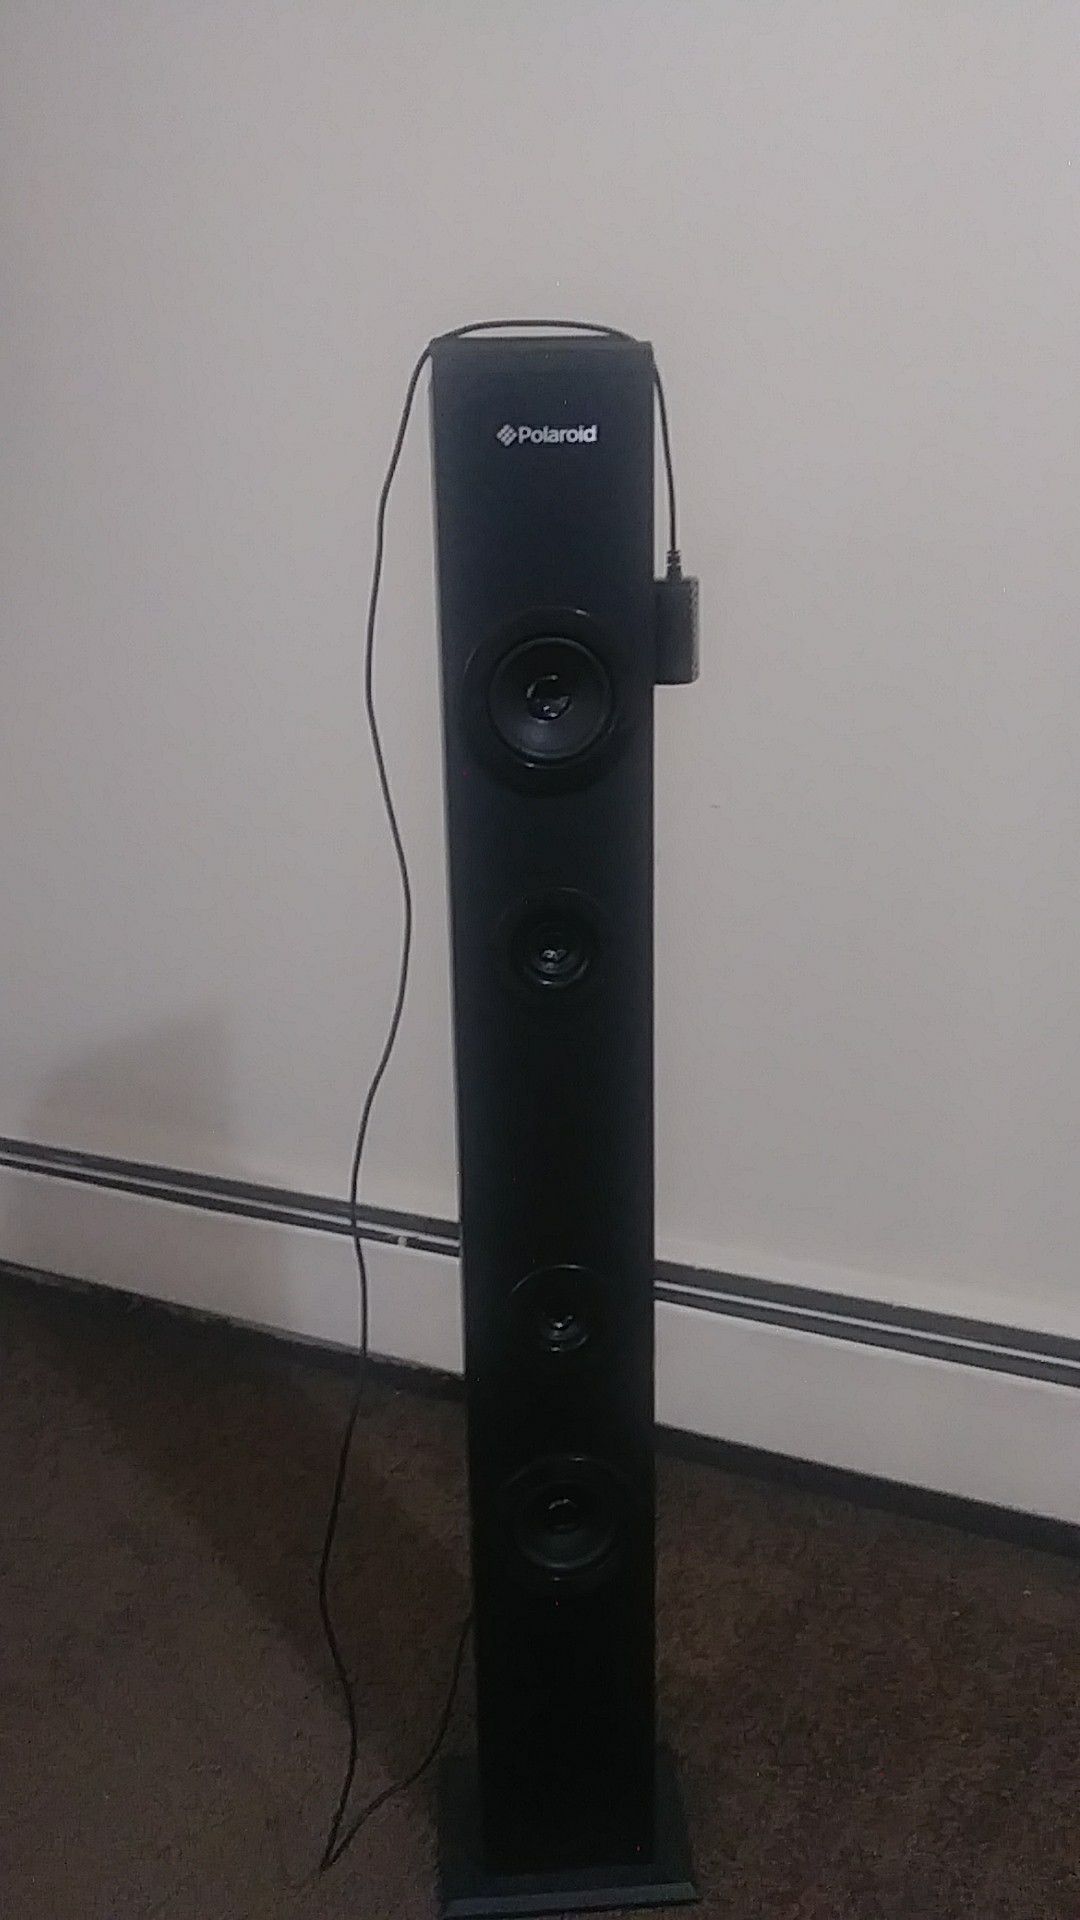 Bluetooth speaker with flashing